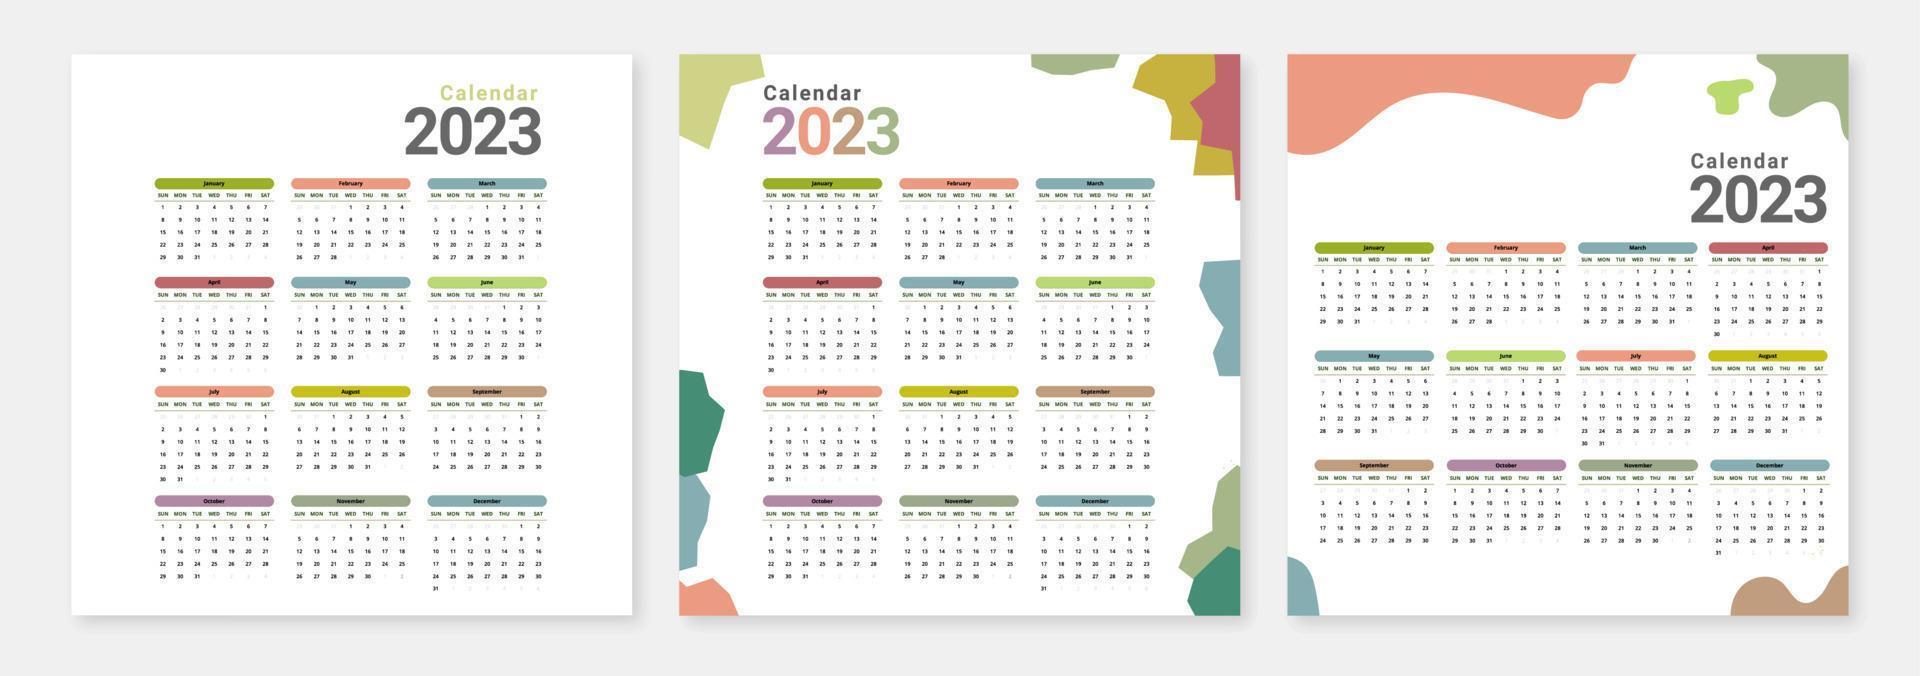 Vector graphic of  calendar of 2023